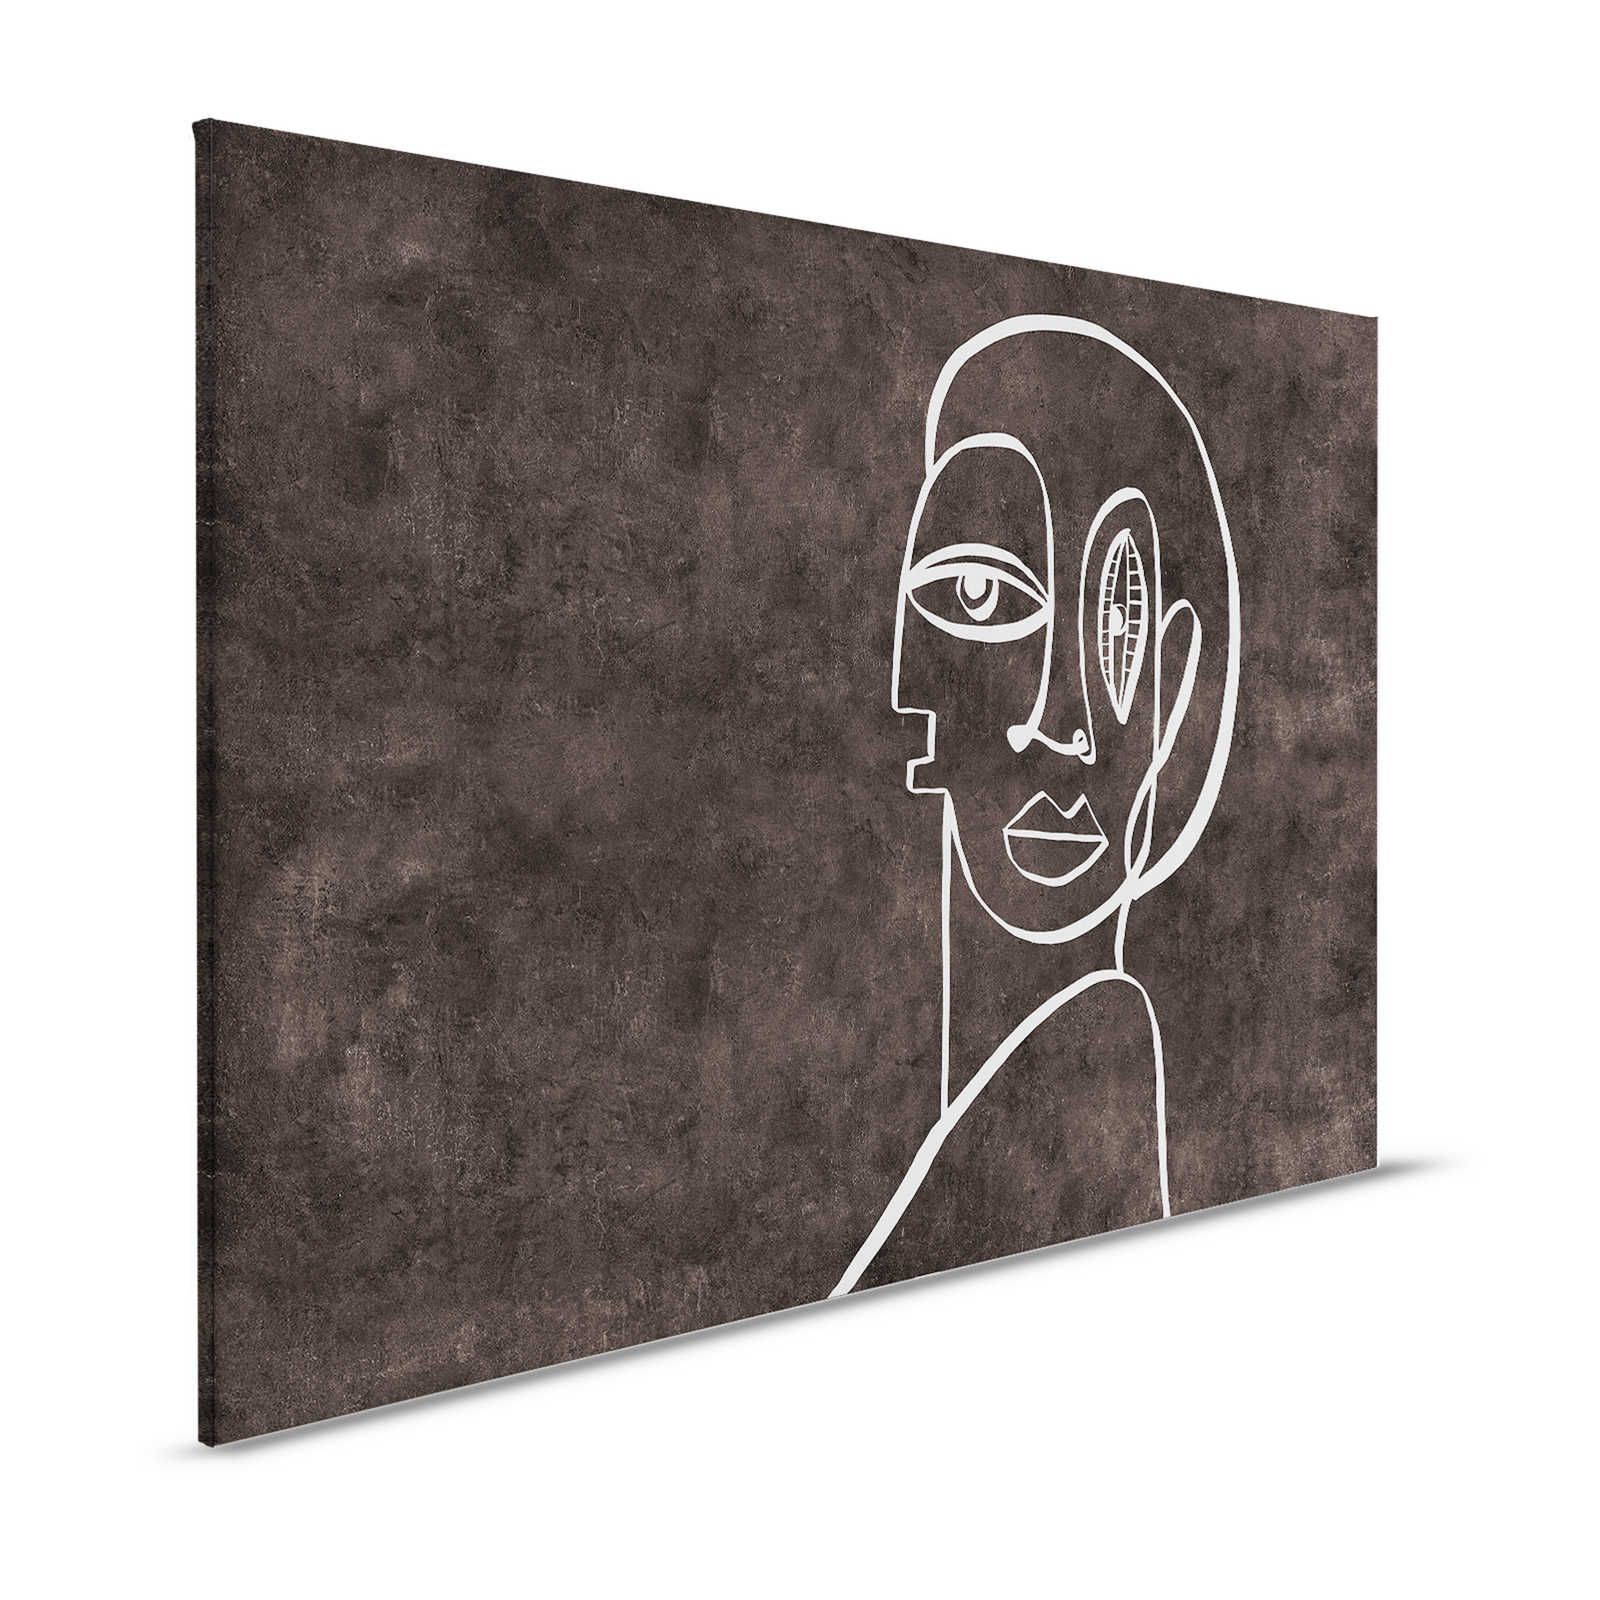 Palomas Room 2 - Black Canvas Painting Abstract Line Art Portrait - 1.20 m x 0.80 m
